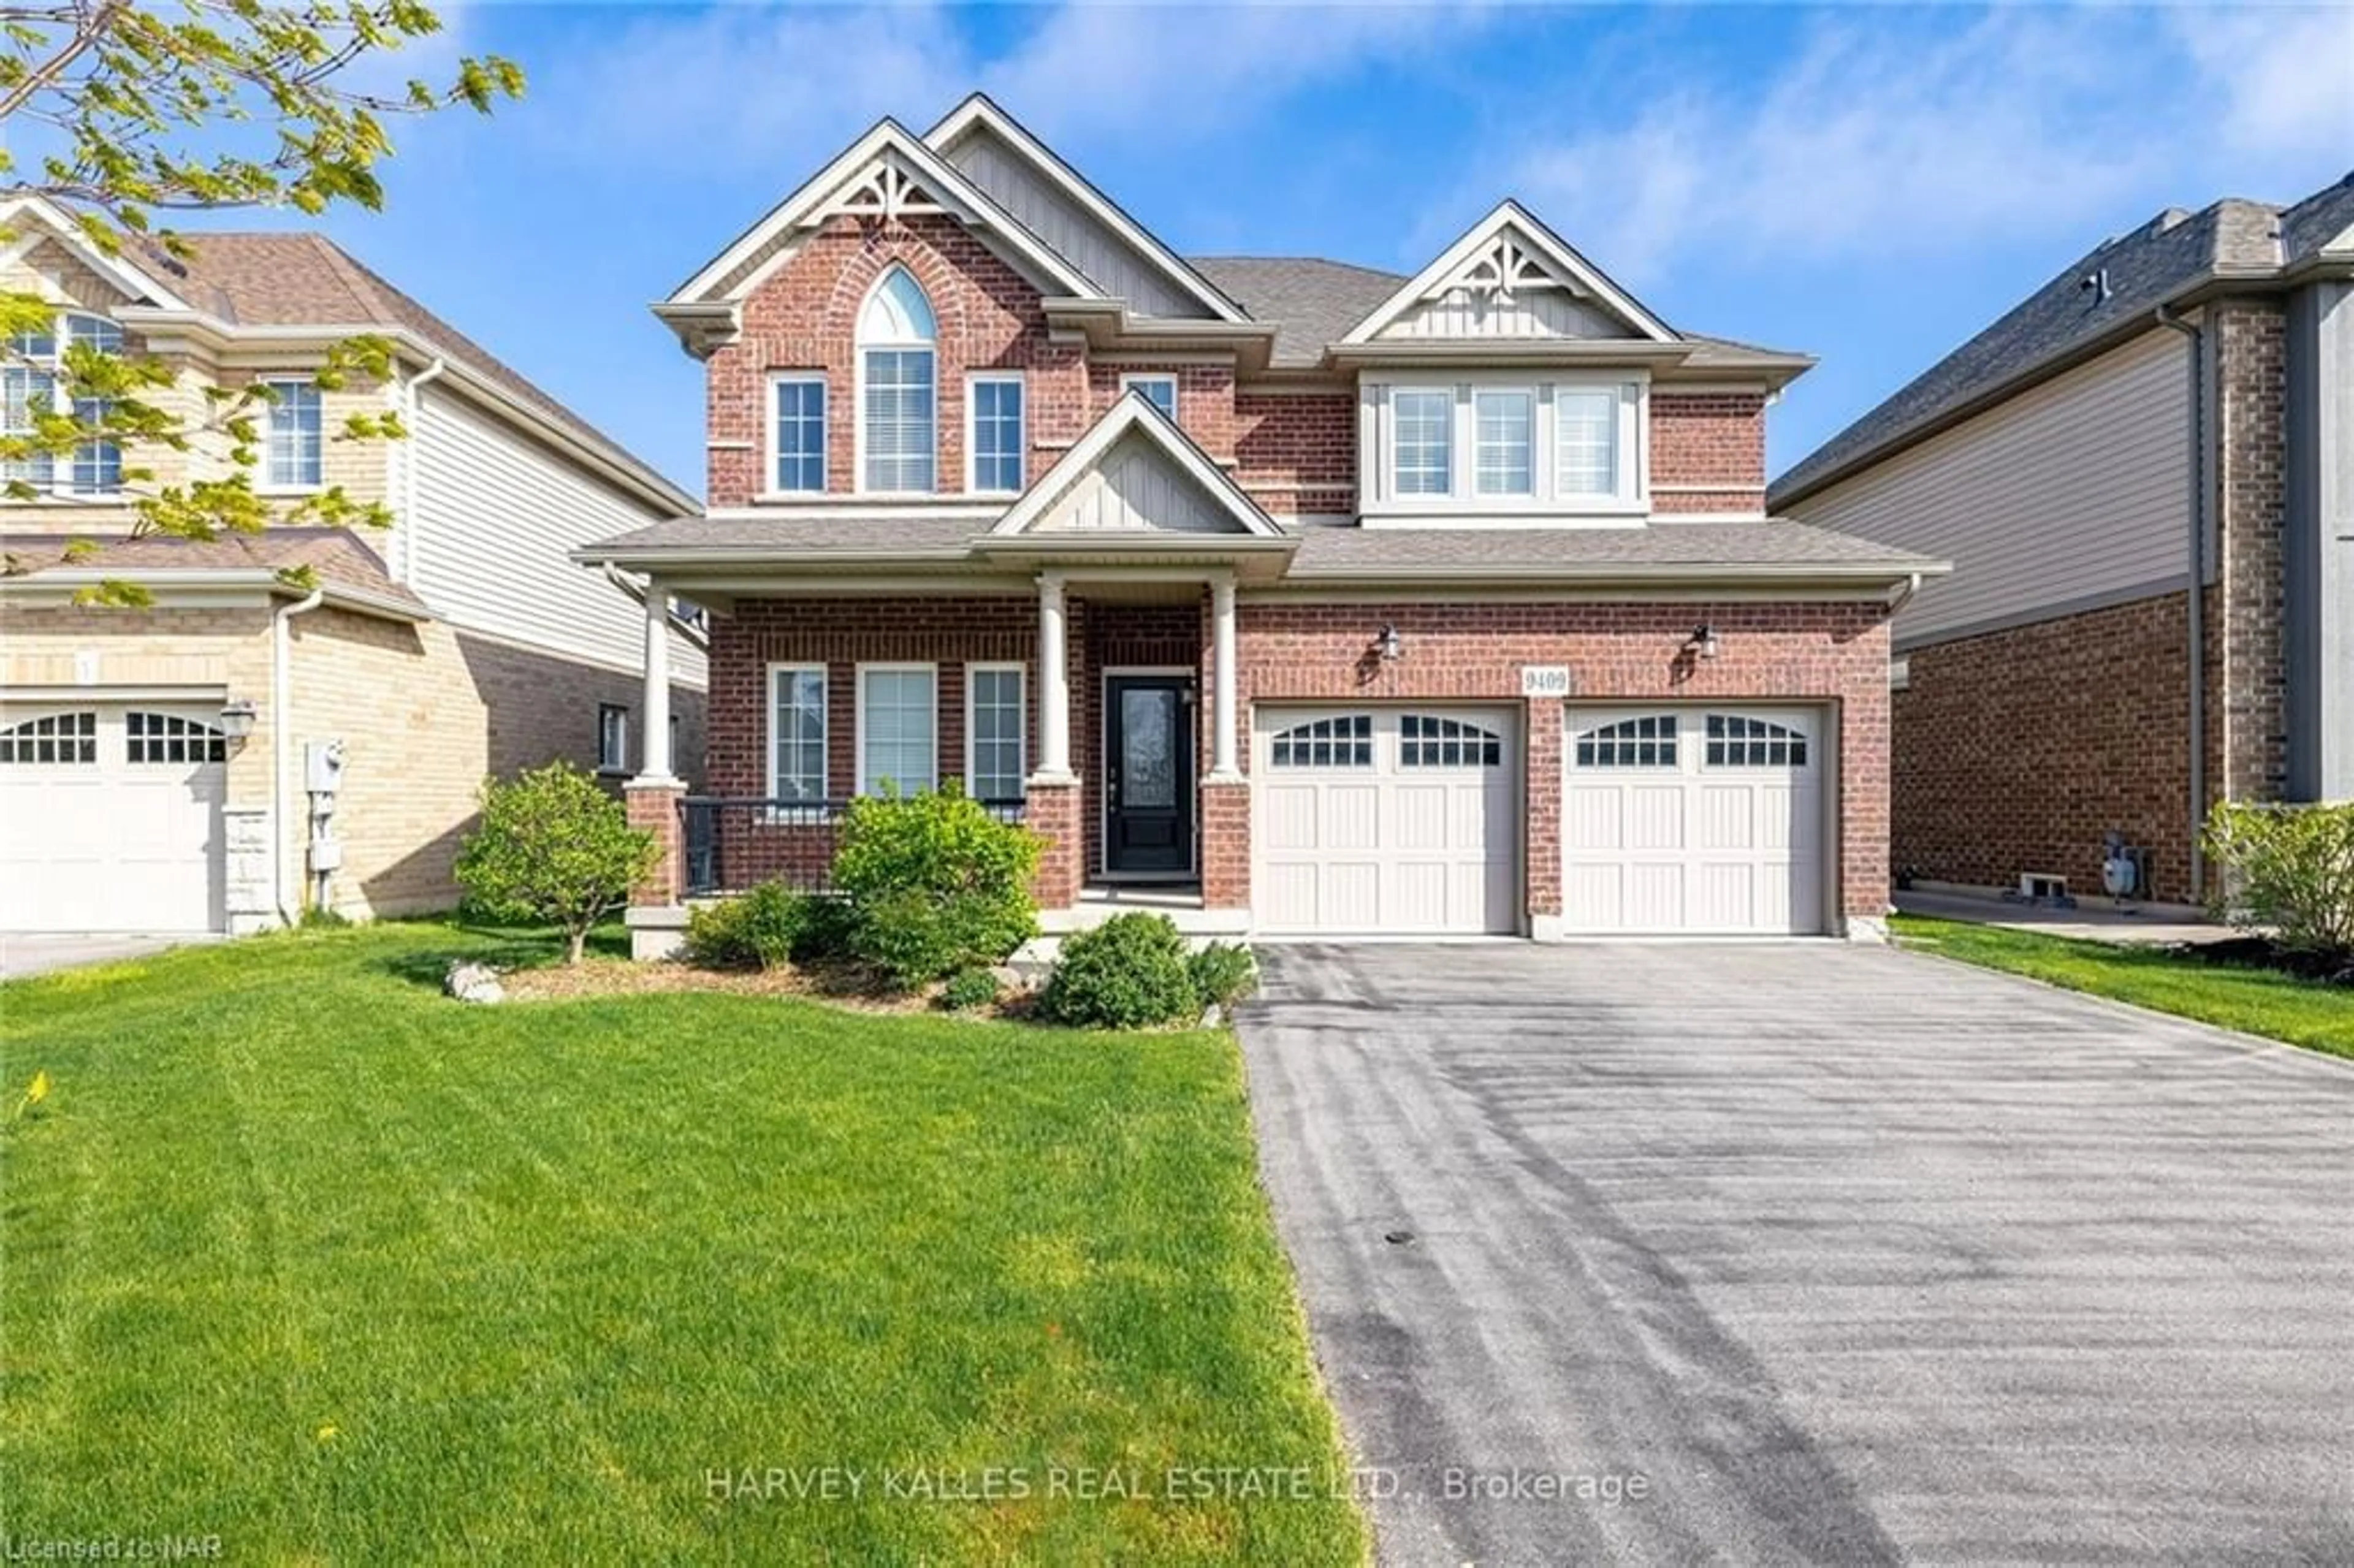 Frontside or backside of a home for 9409 Hendershot Blvd, Niagara Falls Ontario L2H 0G1